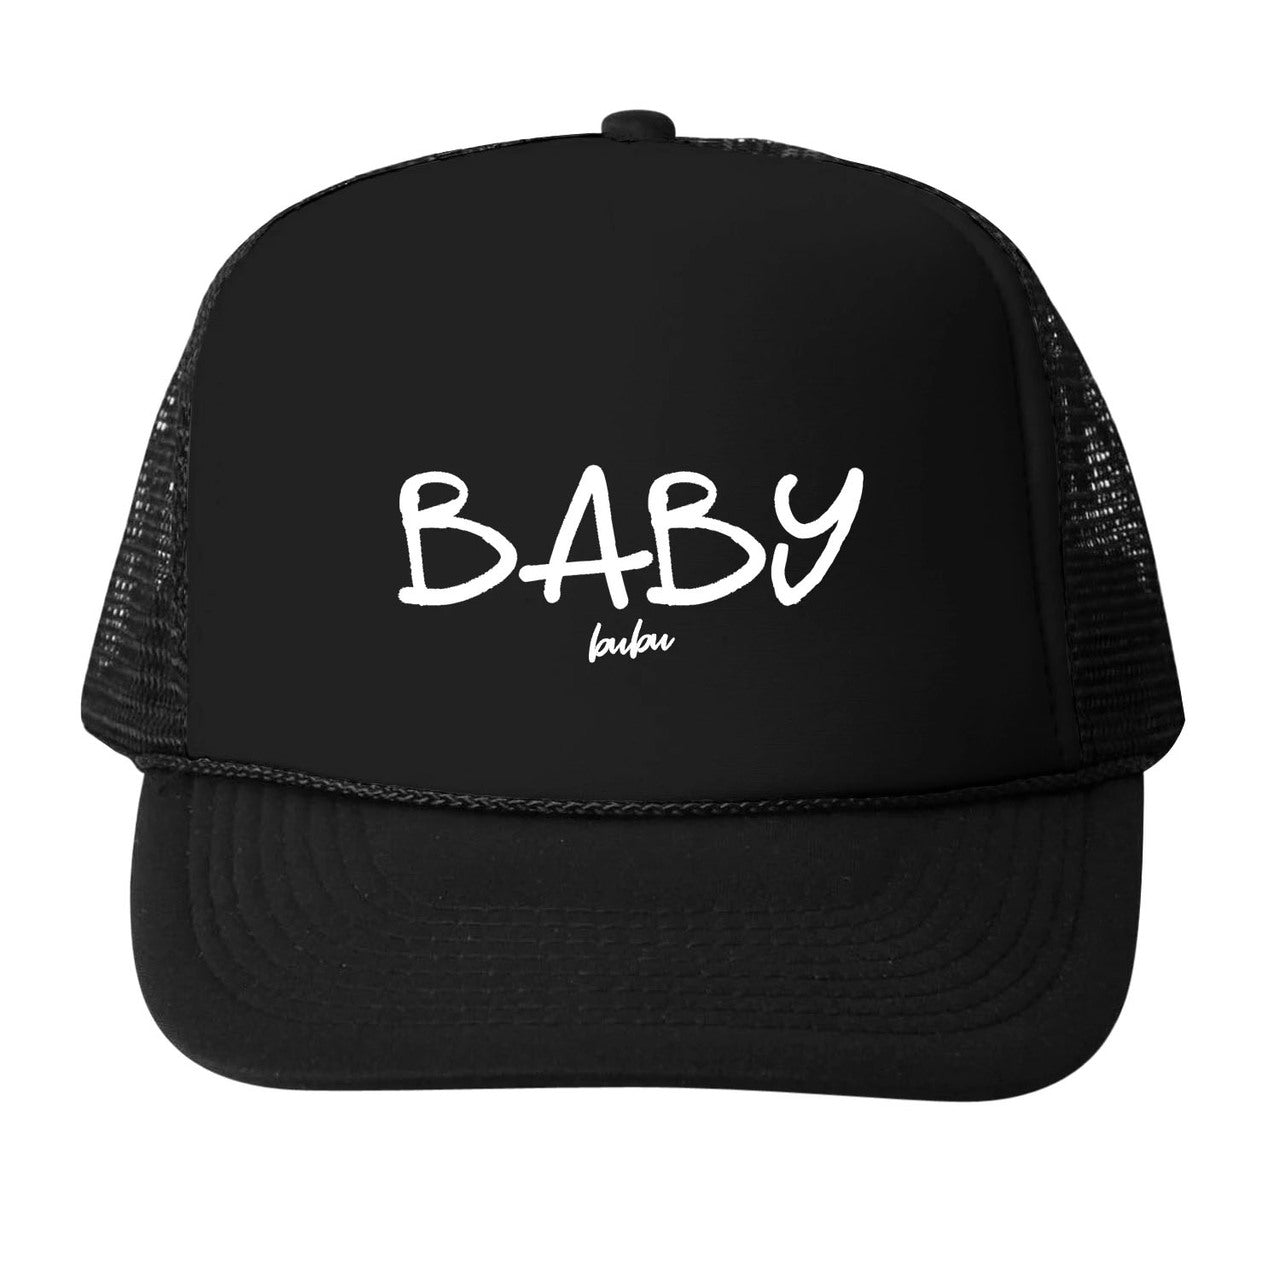 SpearmintLOVE’s baby Baby Mesh Trucker Hat